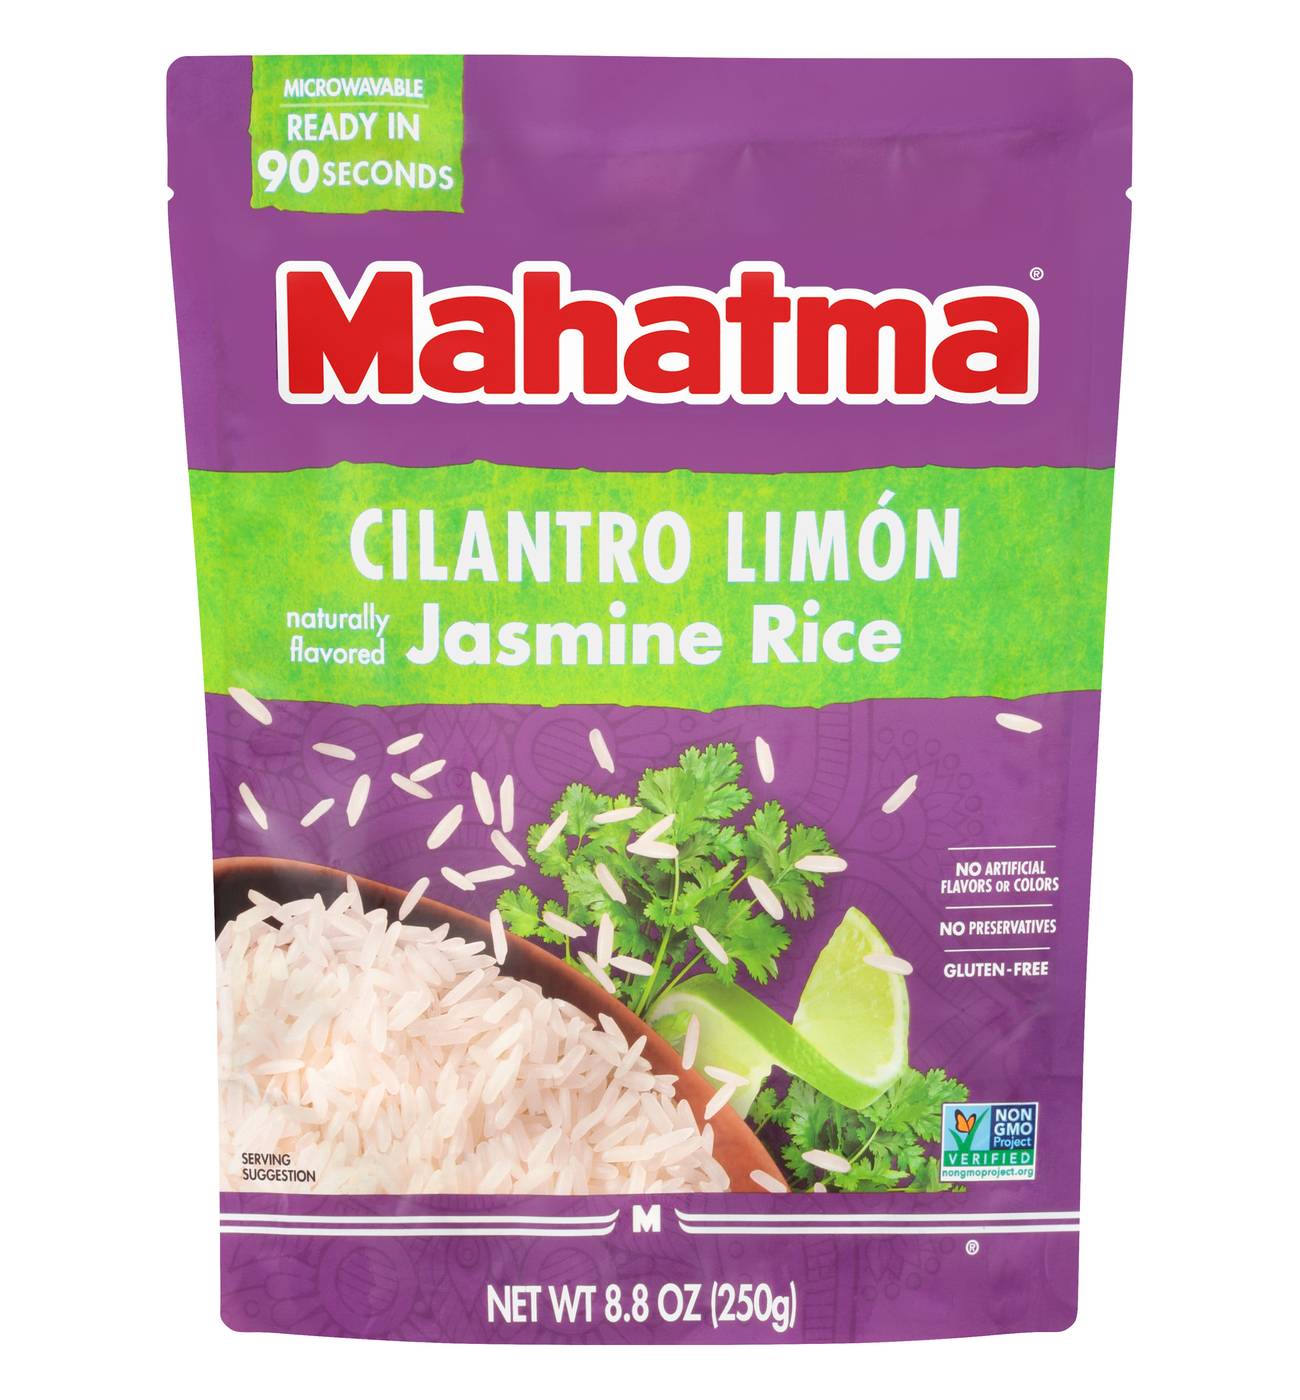 Mahatma Cilantro Lime Jasmine Rice; image 1 of 6